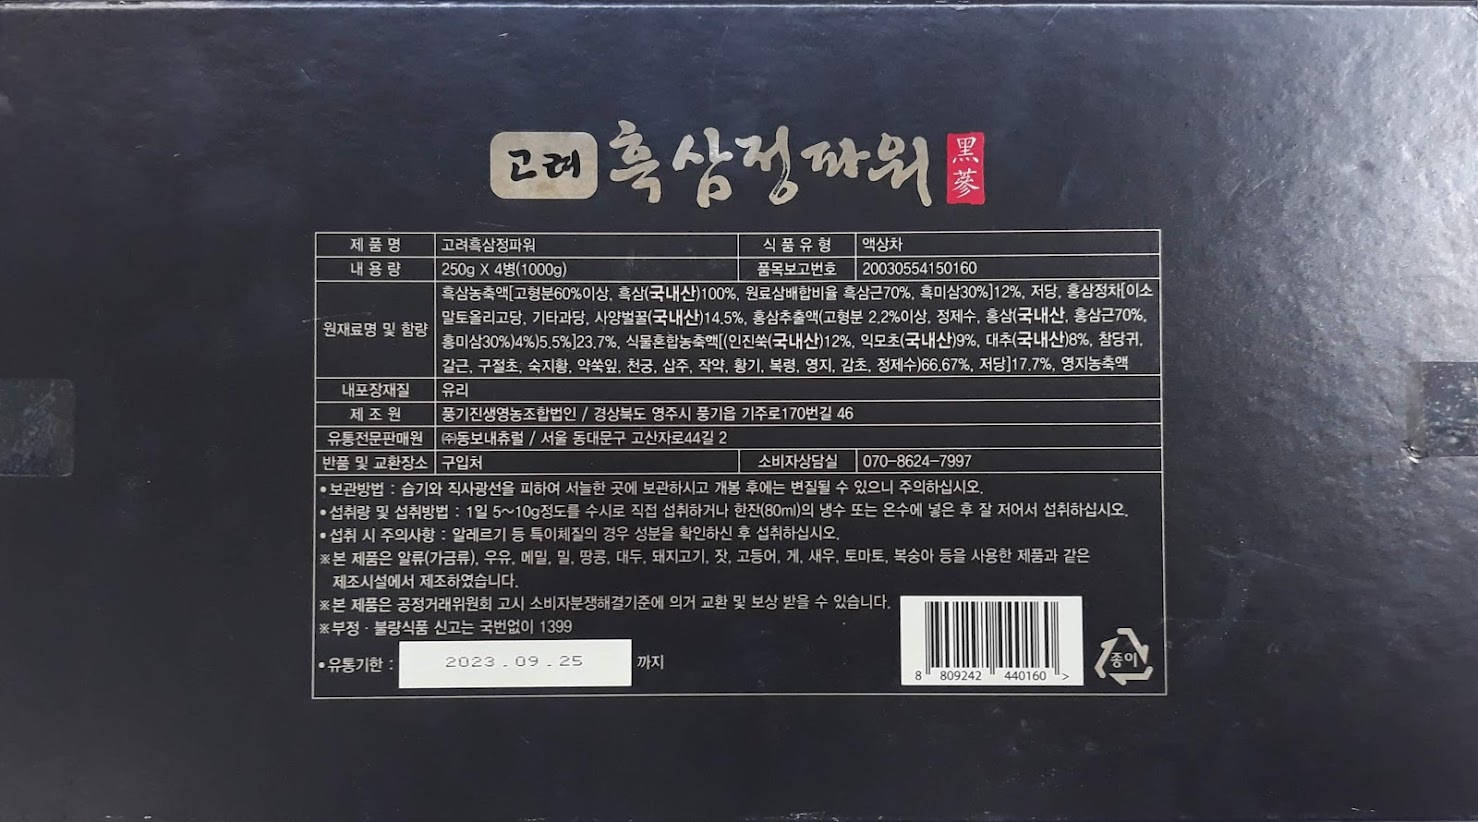 Cao hắc sâm korea black ginseng extract power 250gr x 4 lọ Main Dongbo Natural